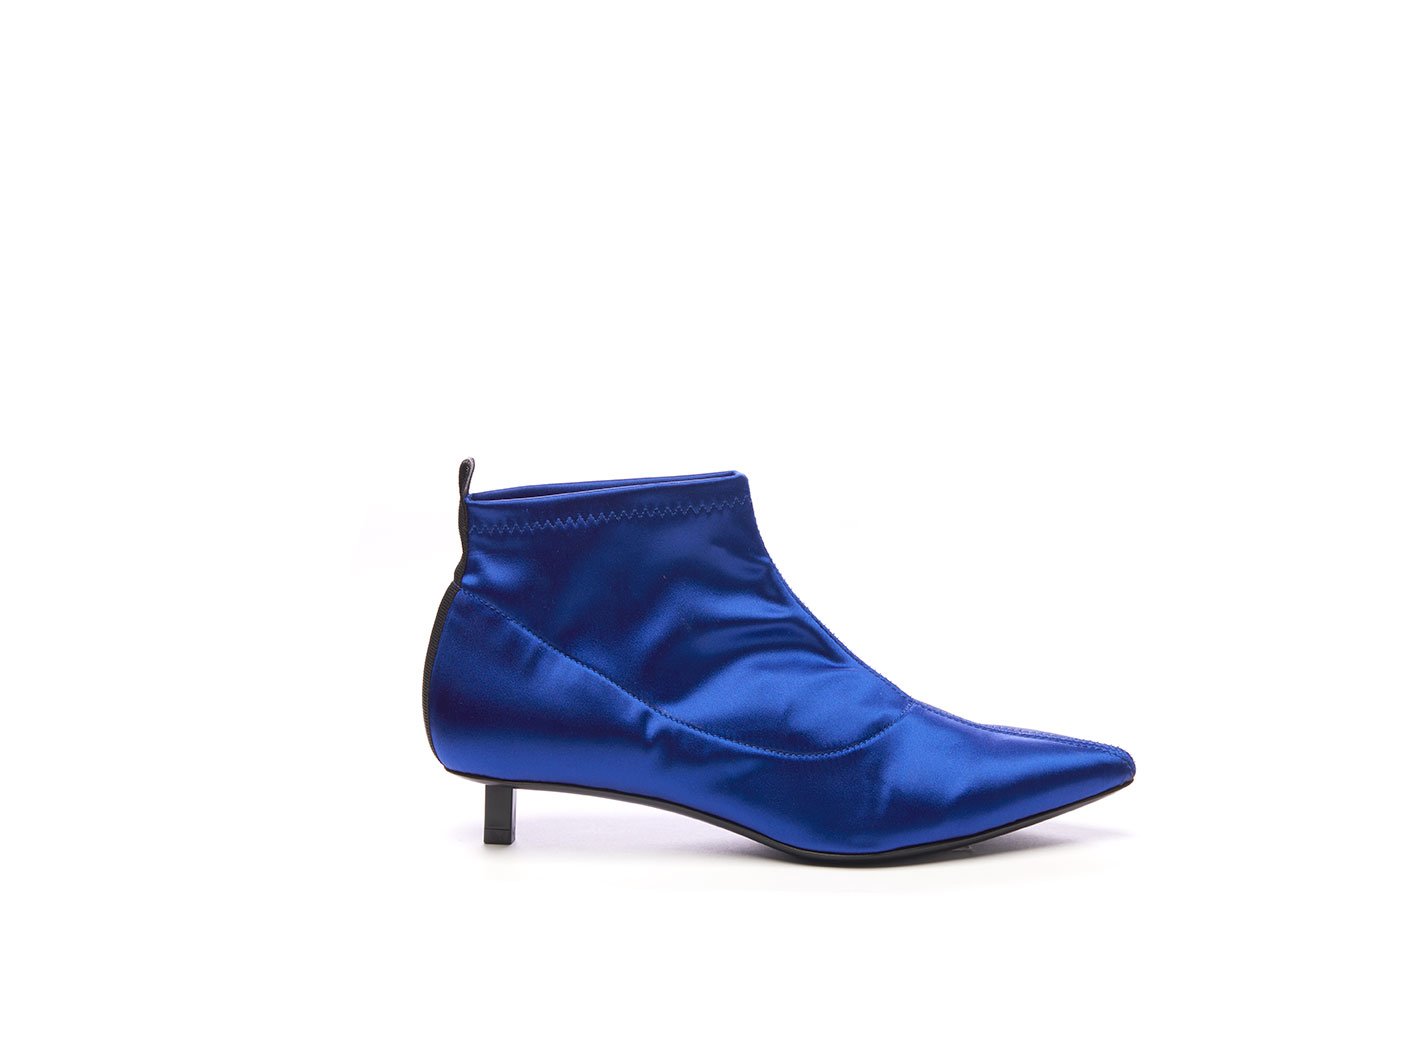 cornflower blue high heels